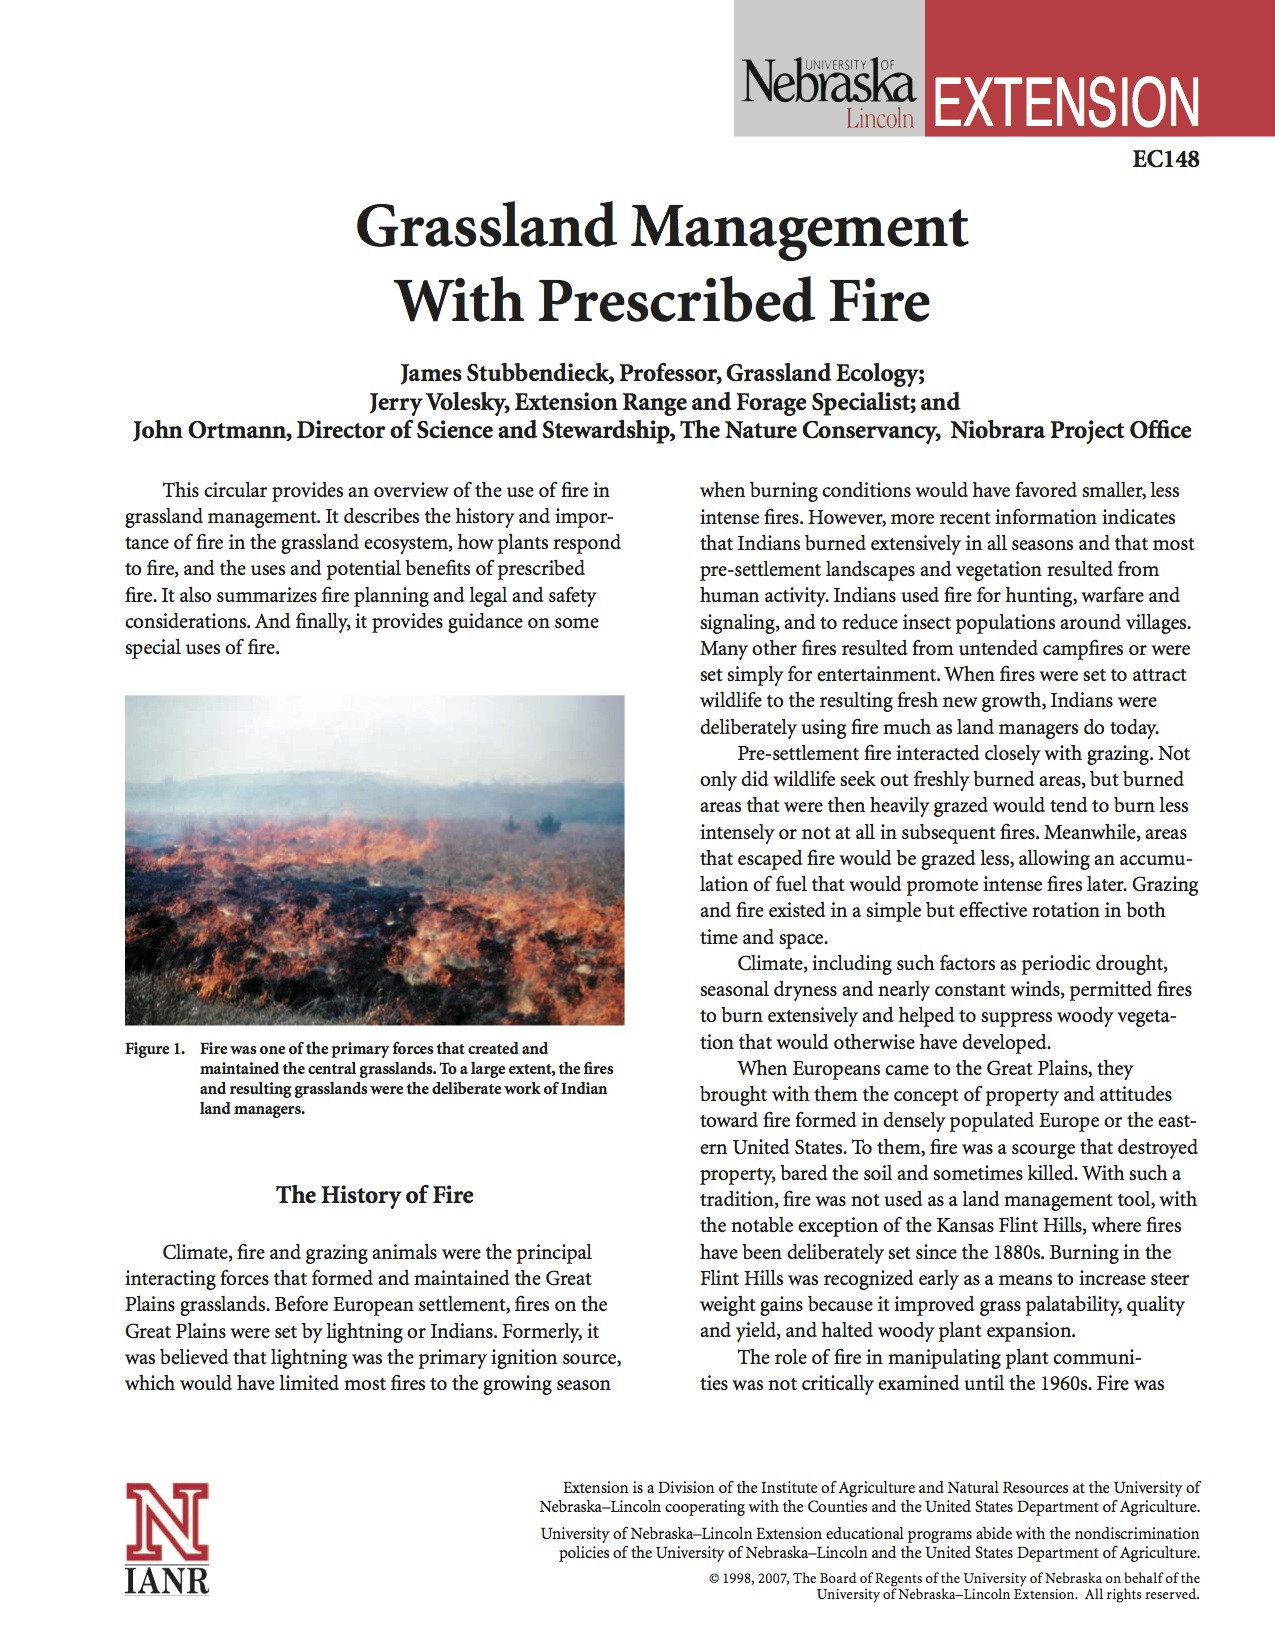 Grassland Management with Prescribed Fire